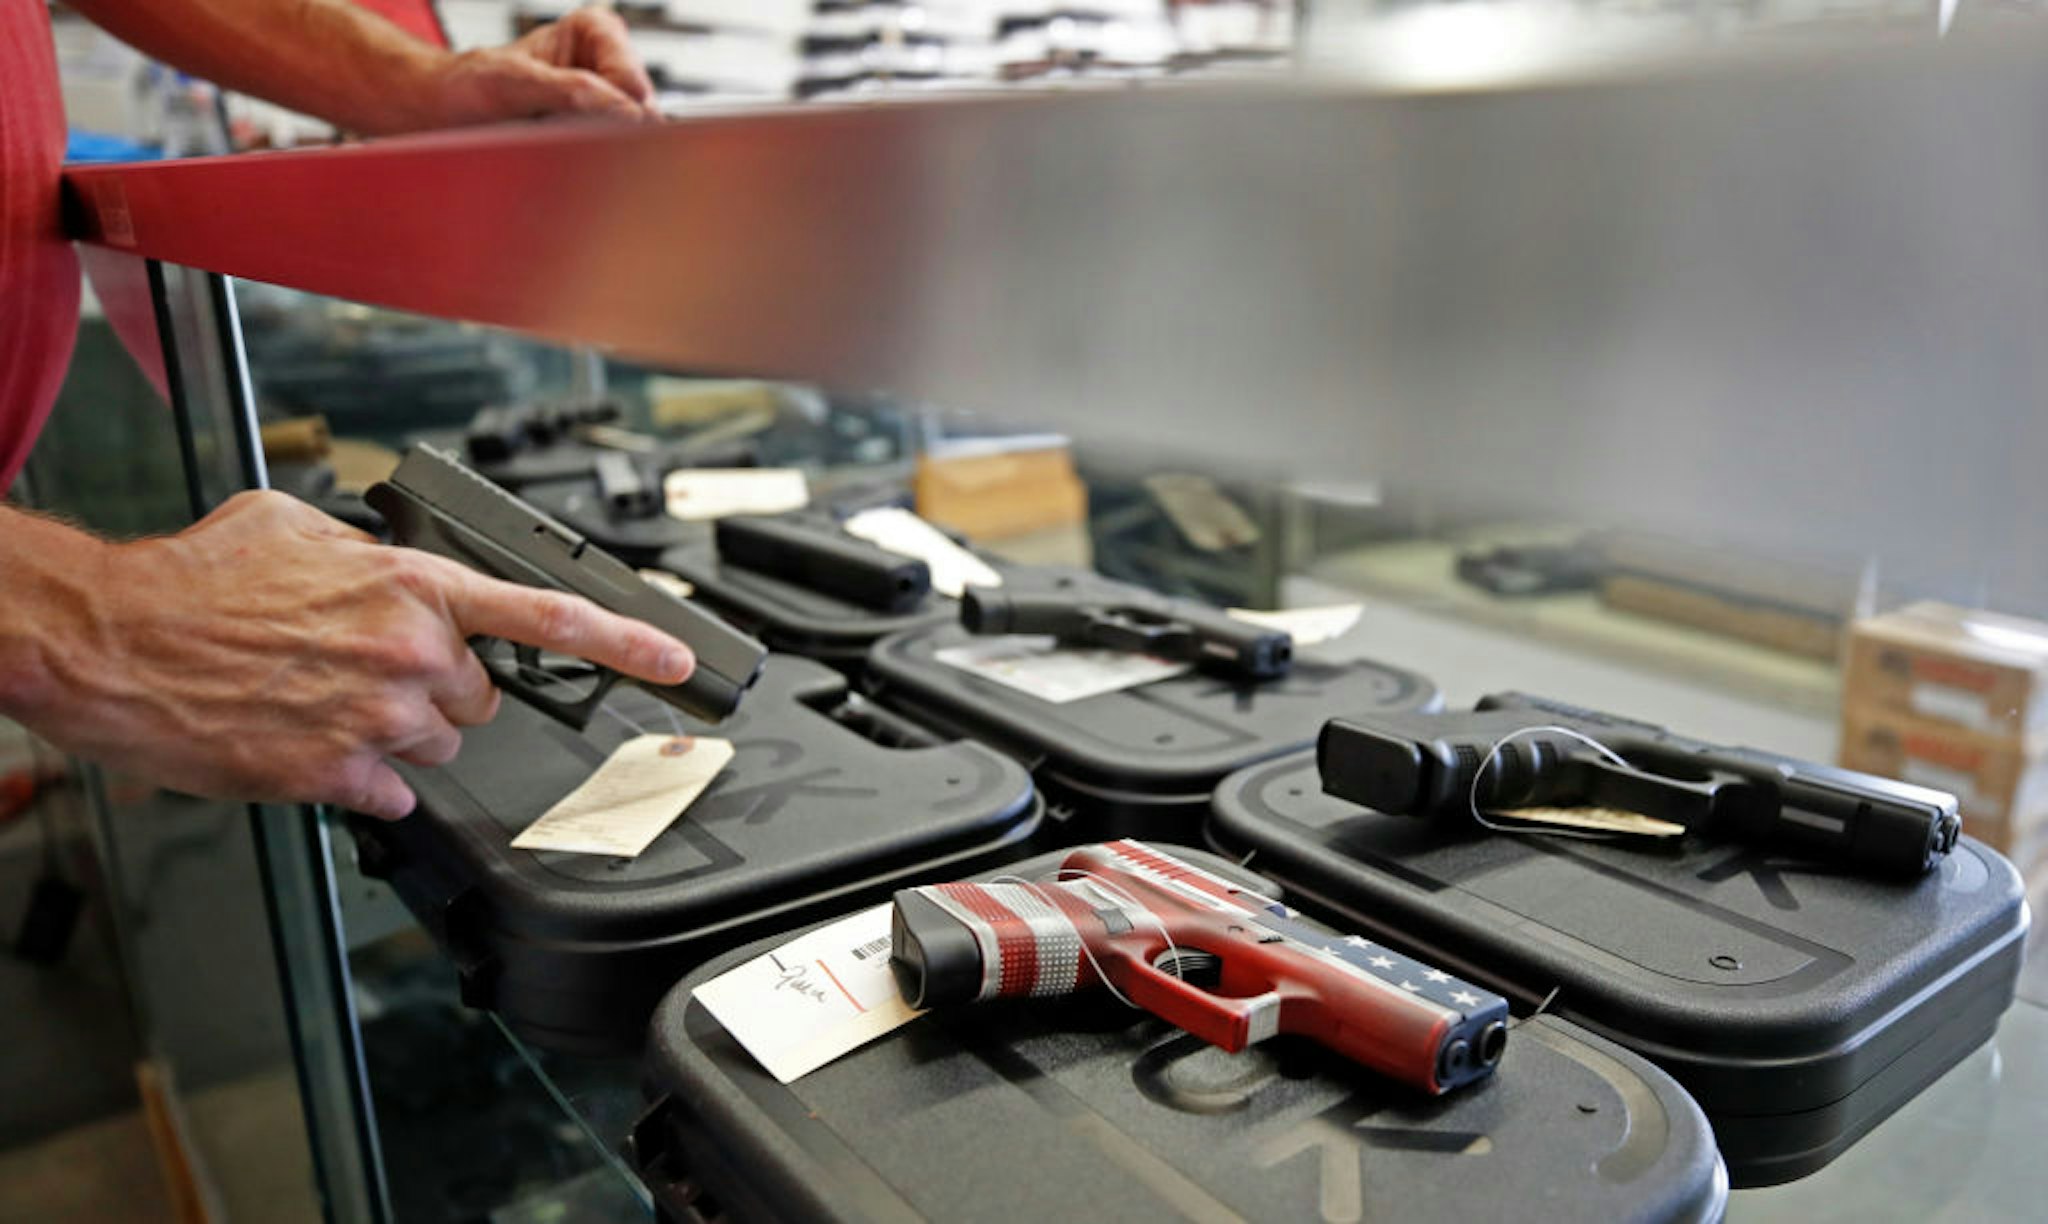 A worker restocks handguns at Davidson Defense in Orem, Utah on March 20, 2020.